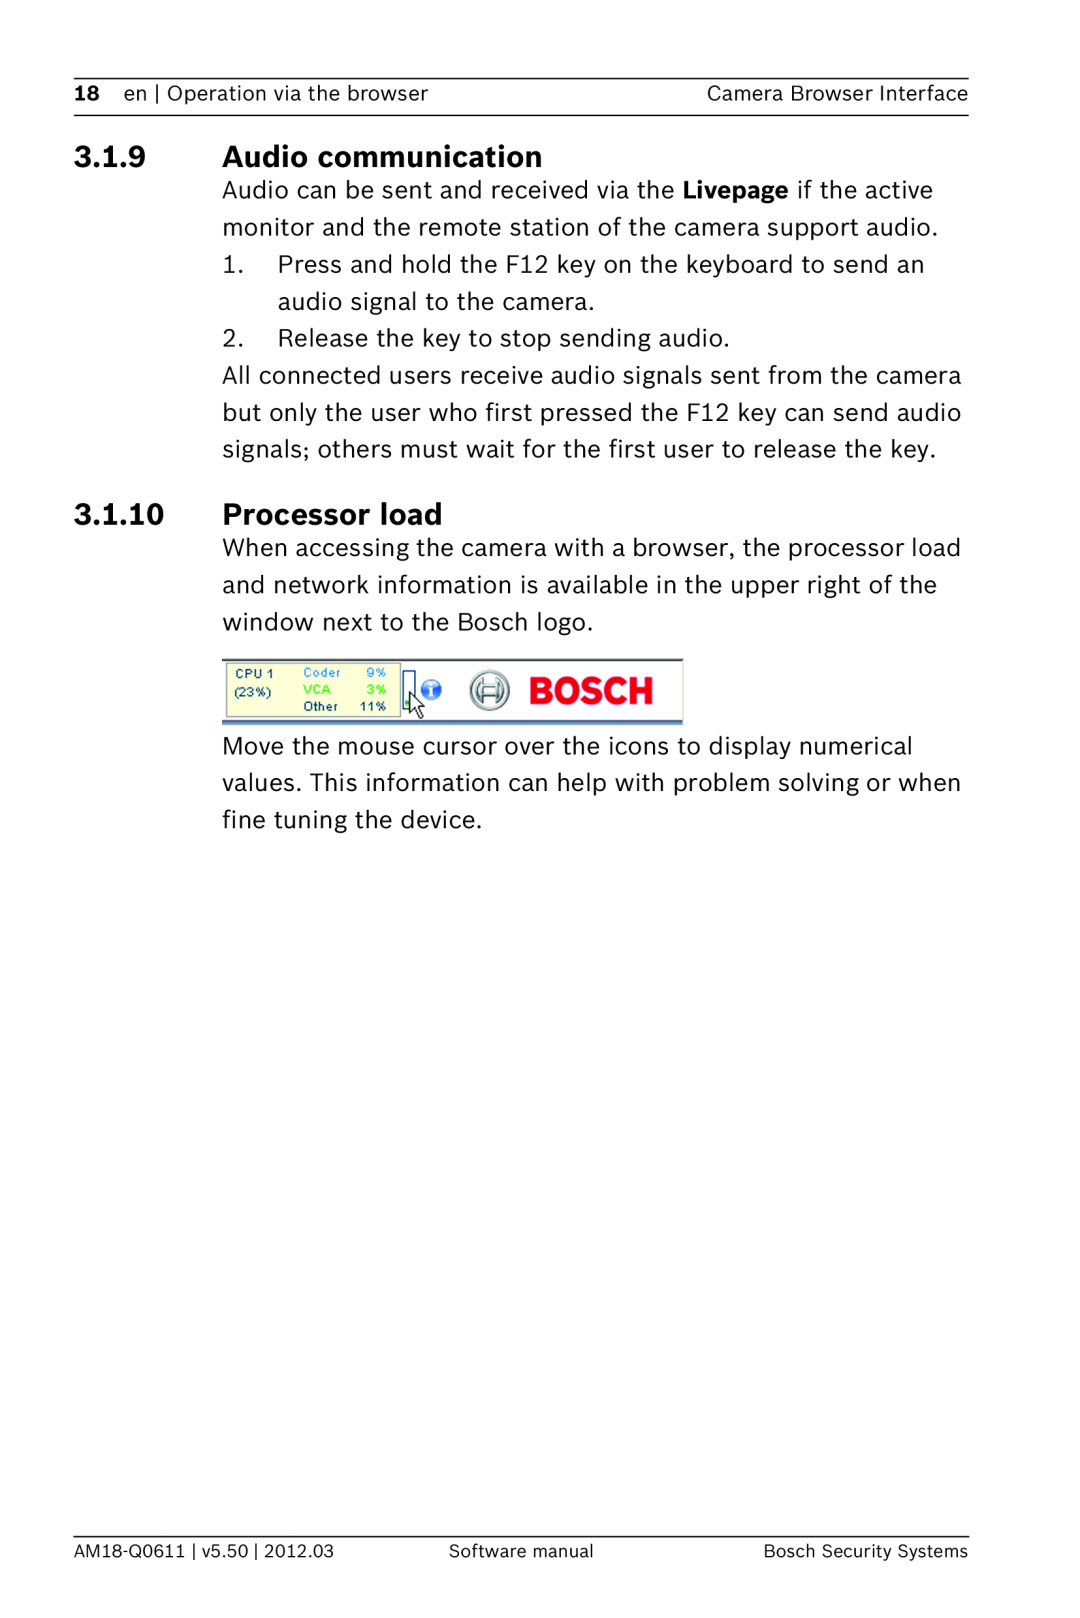 Bosch Appliances FW5.50 software manual 3.1.9Audio communication, 3.1.10Processor load 